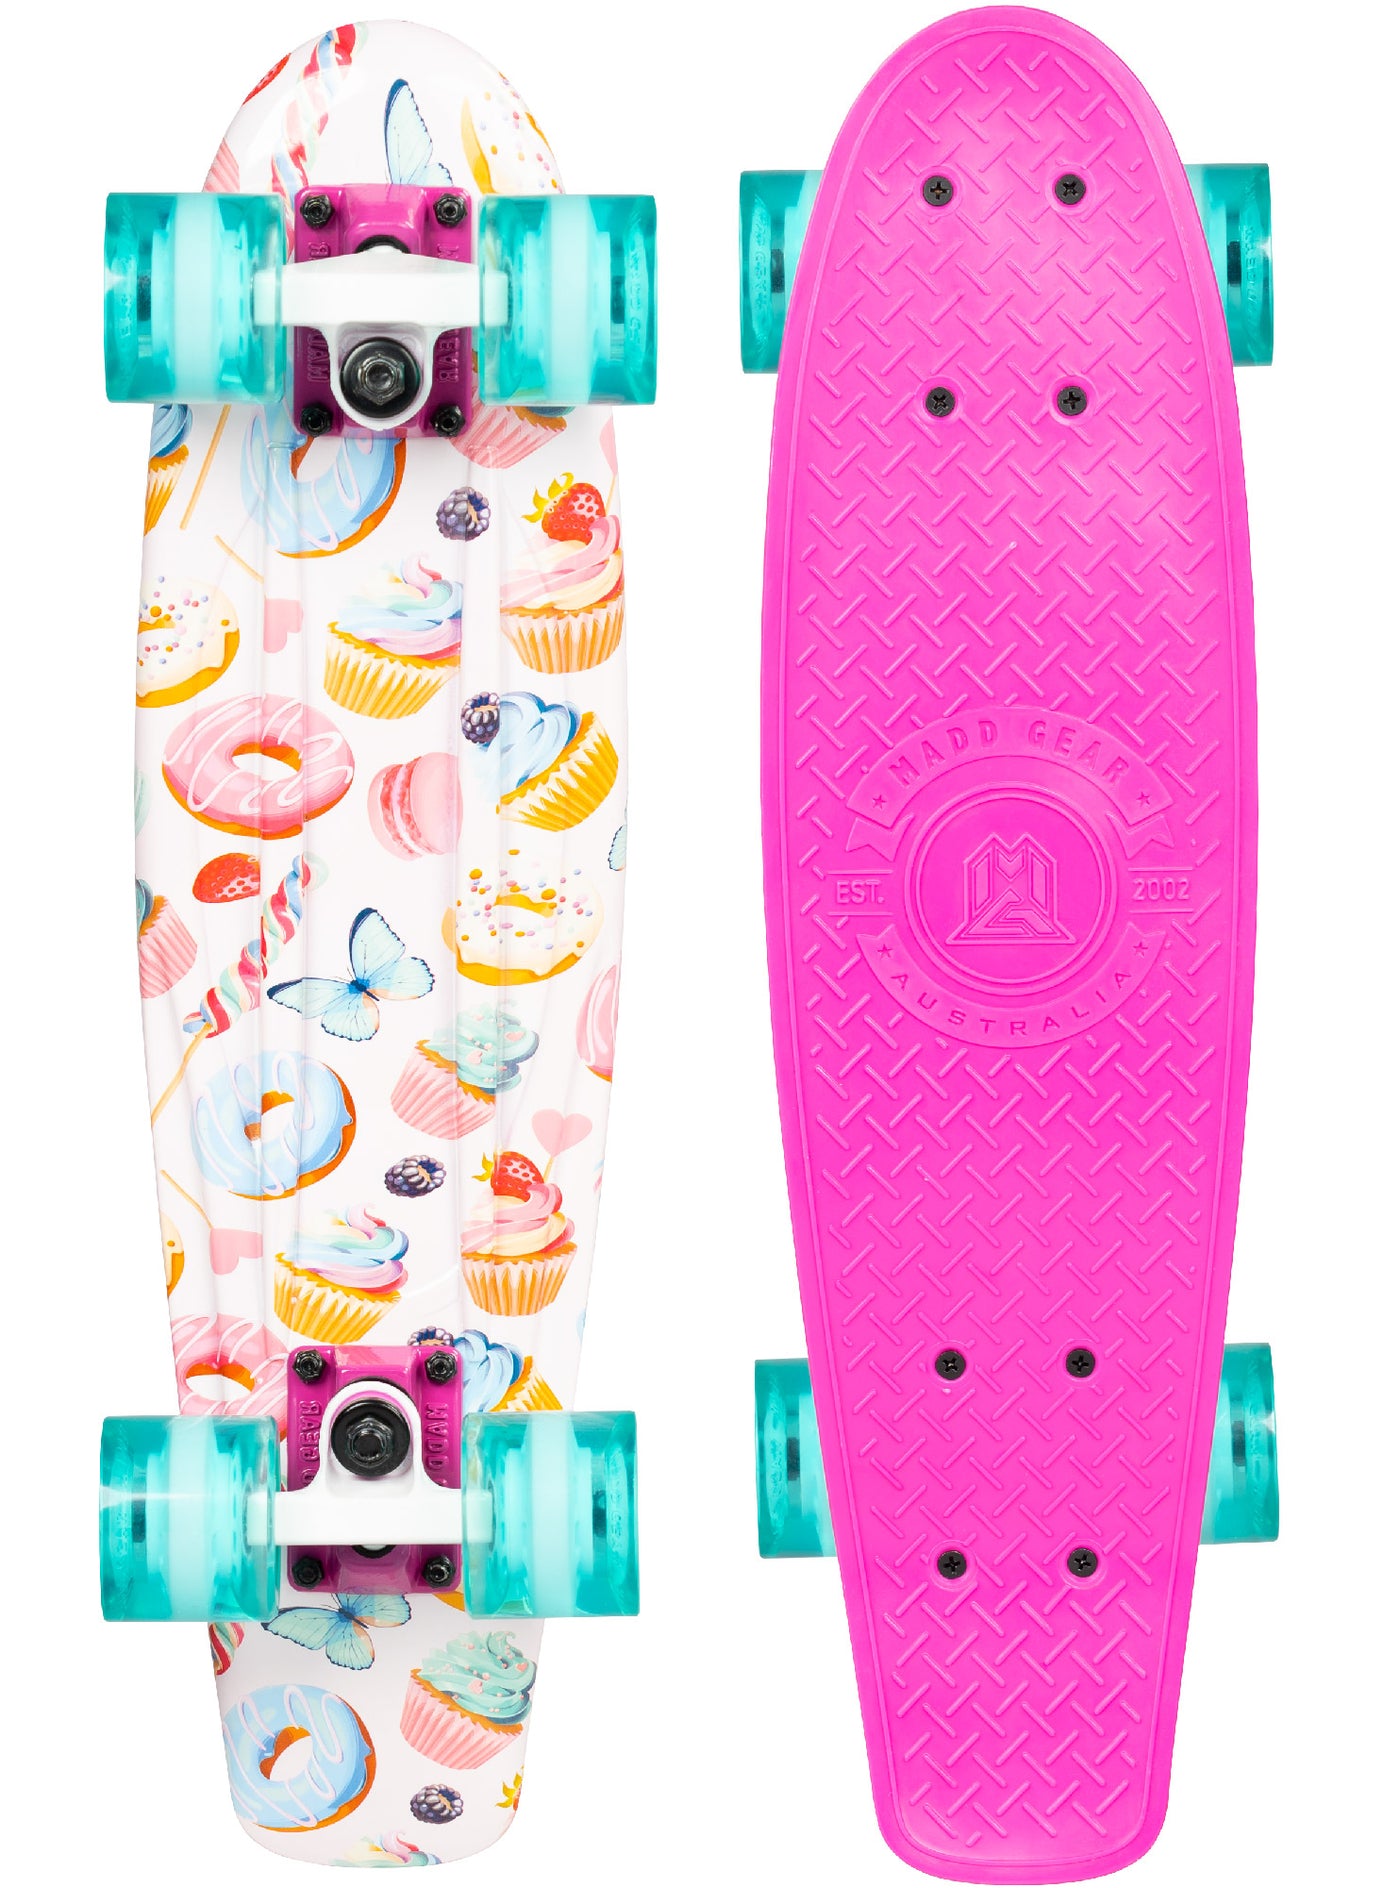 Madd Gear Retro Board Skateboard Penny 22" Plastic Flexible Kids Children Complete High Quality Pink